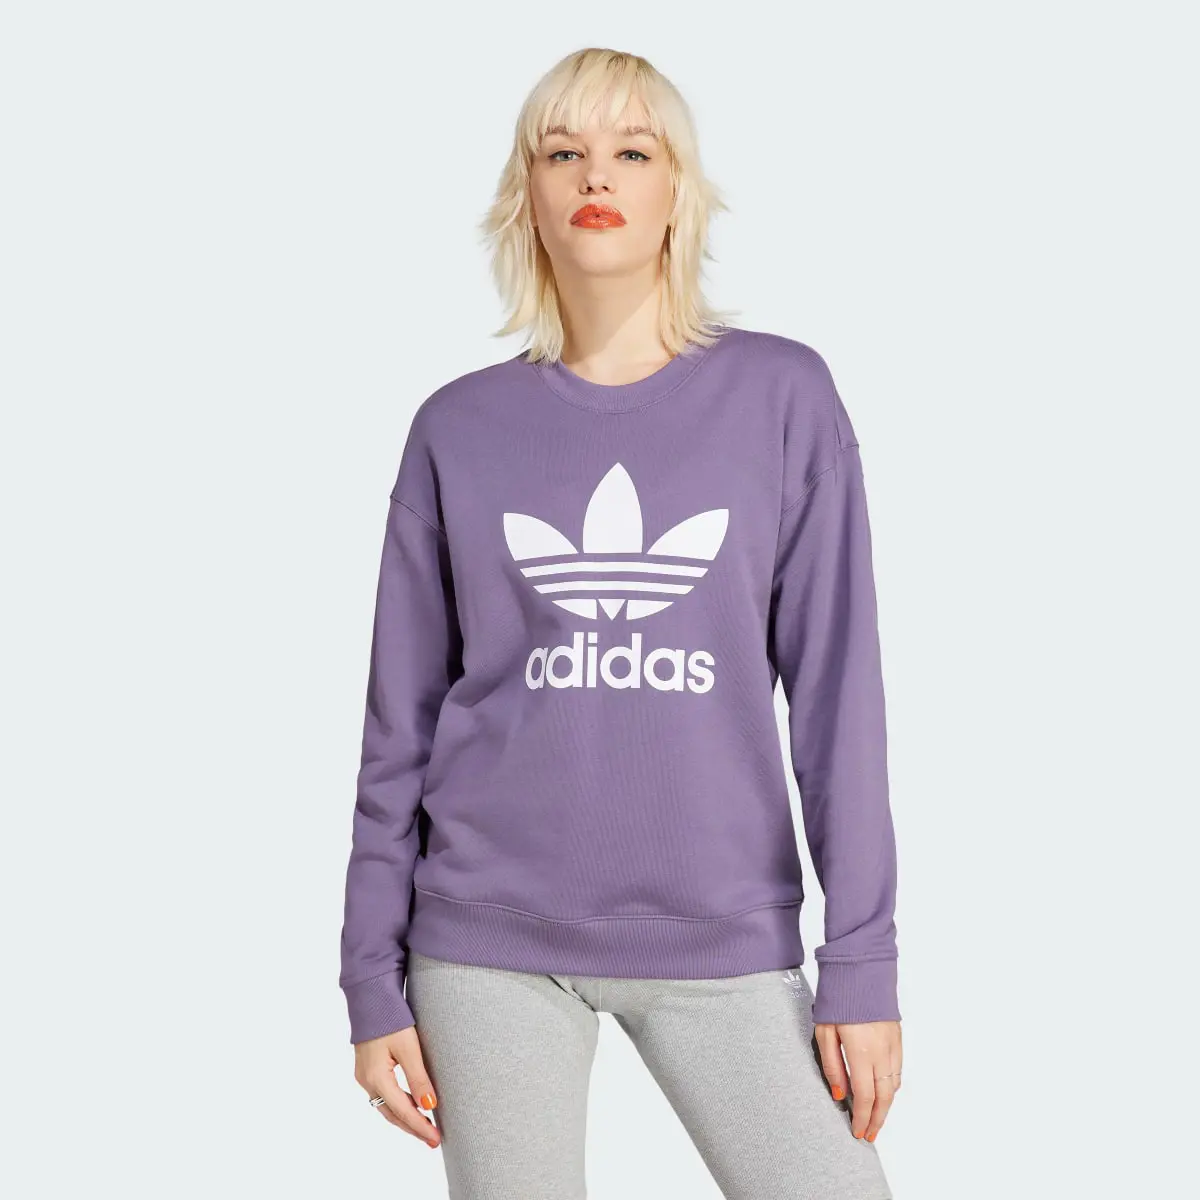 Adidas Trefoil Crew Sweatshirt. 2